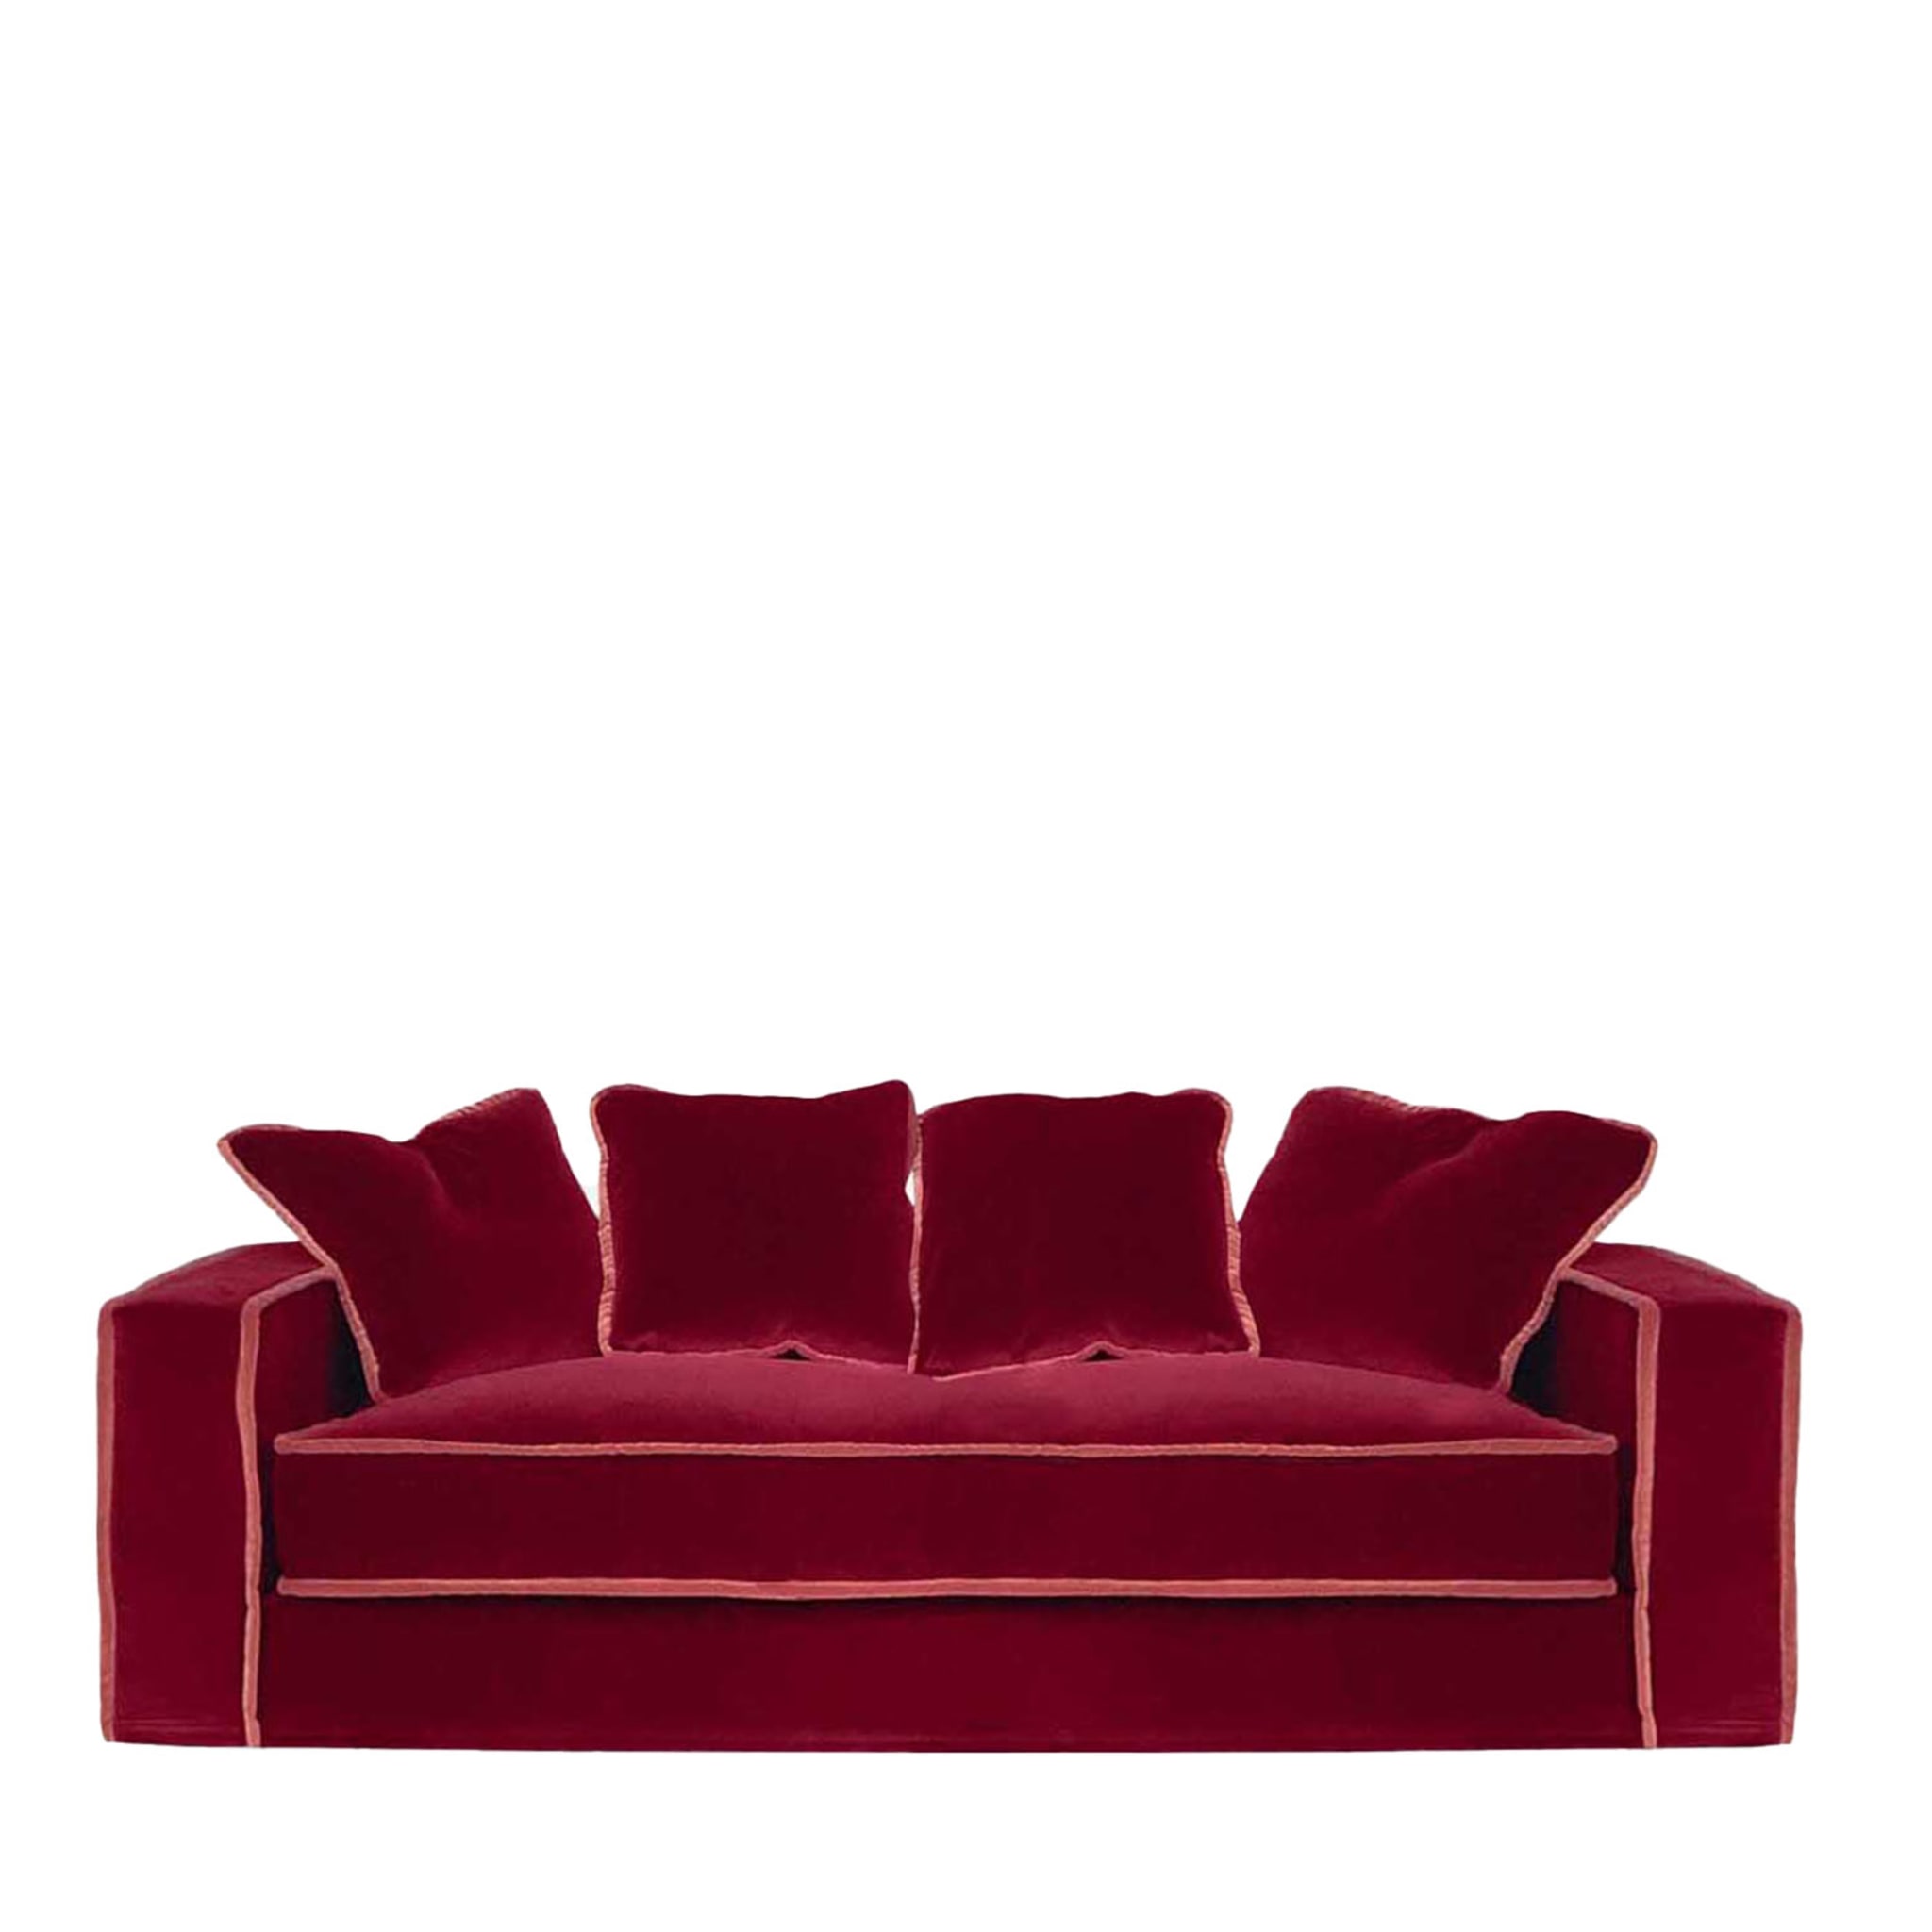 Rafaella Red & Orange Velvet 2 Seater Sofa - Main view